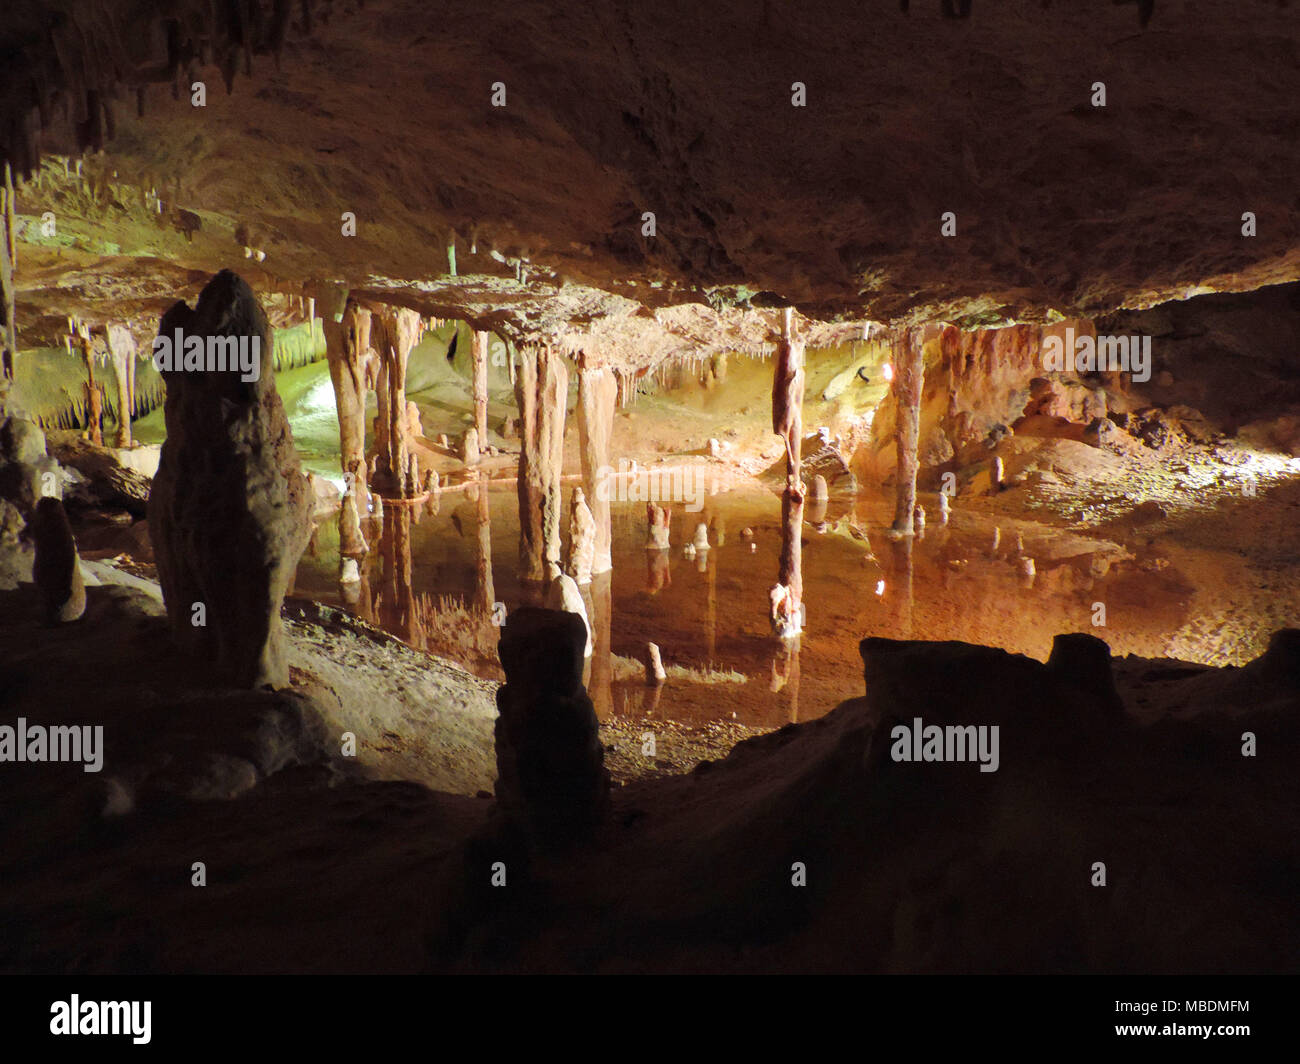 Dripstone cave with subterranean lake or pools.Illuminated cave on Ibiza Island. Stock Photo